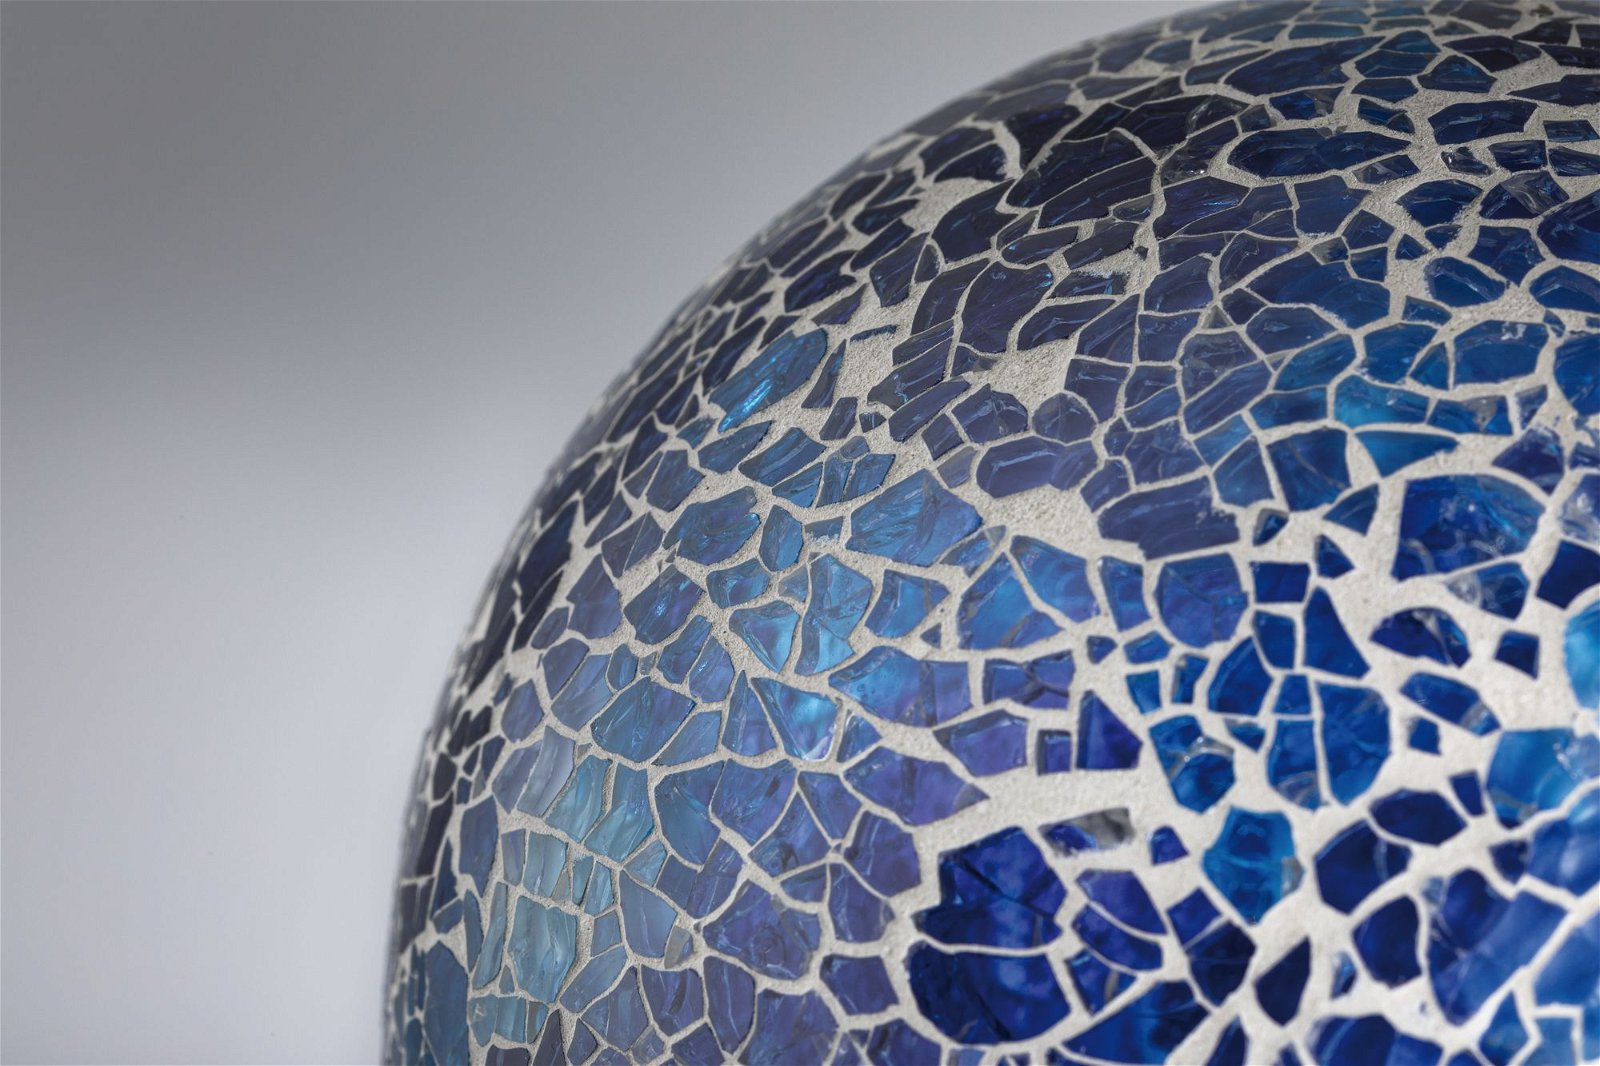 Miracle Mosaic Edition LED Globe E27 230V 470lm 5W 2700K dimbaar Blauw